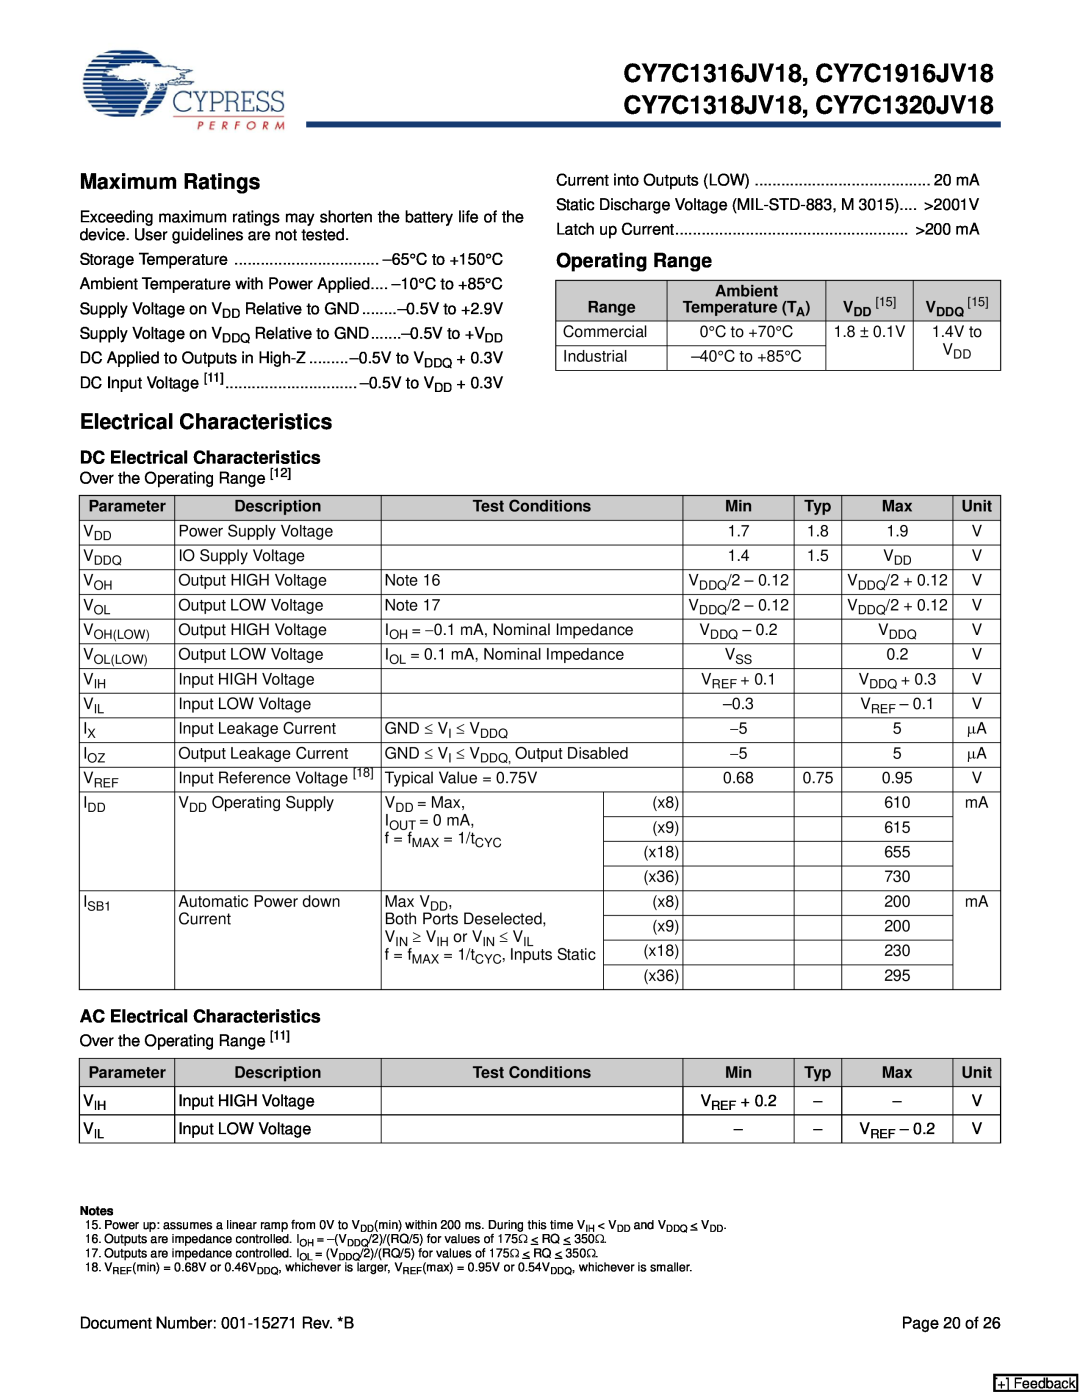 Cypress CY7C1316JV18 Maximum Ratings, Operating Range, DC Electrical Characteristics, AC Electrical Characteristics 